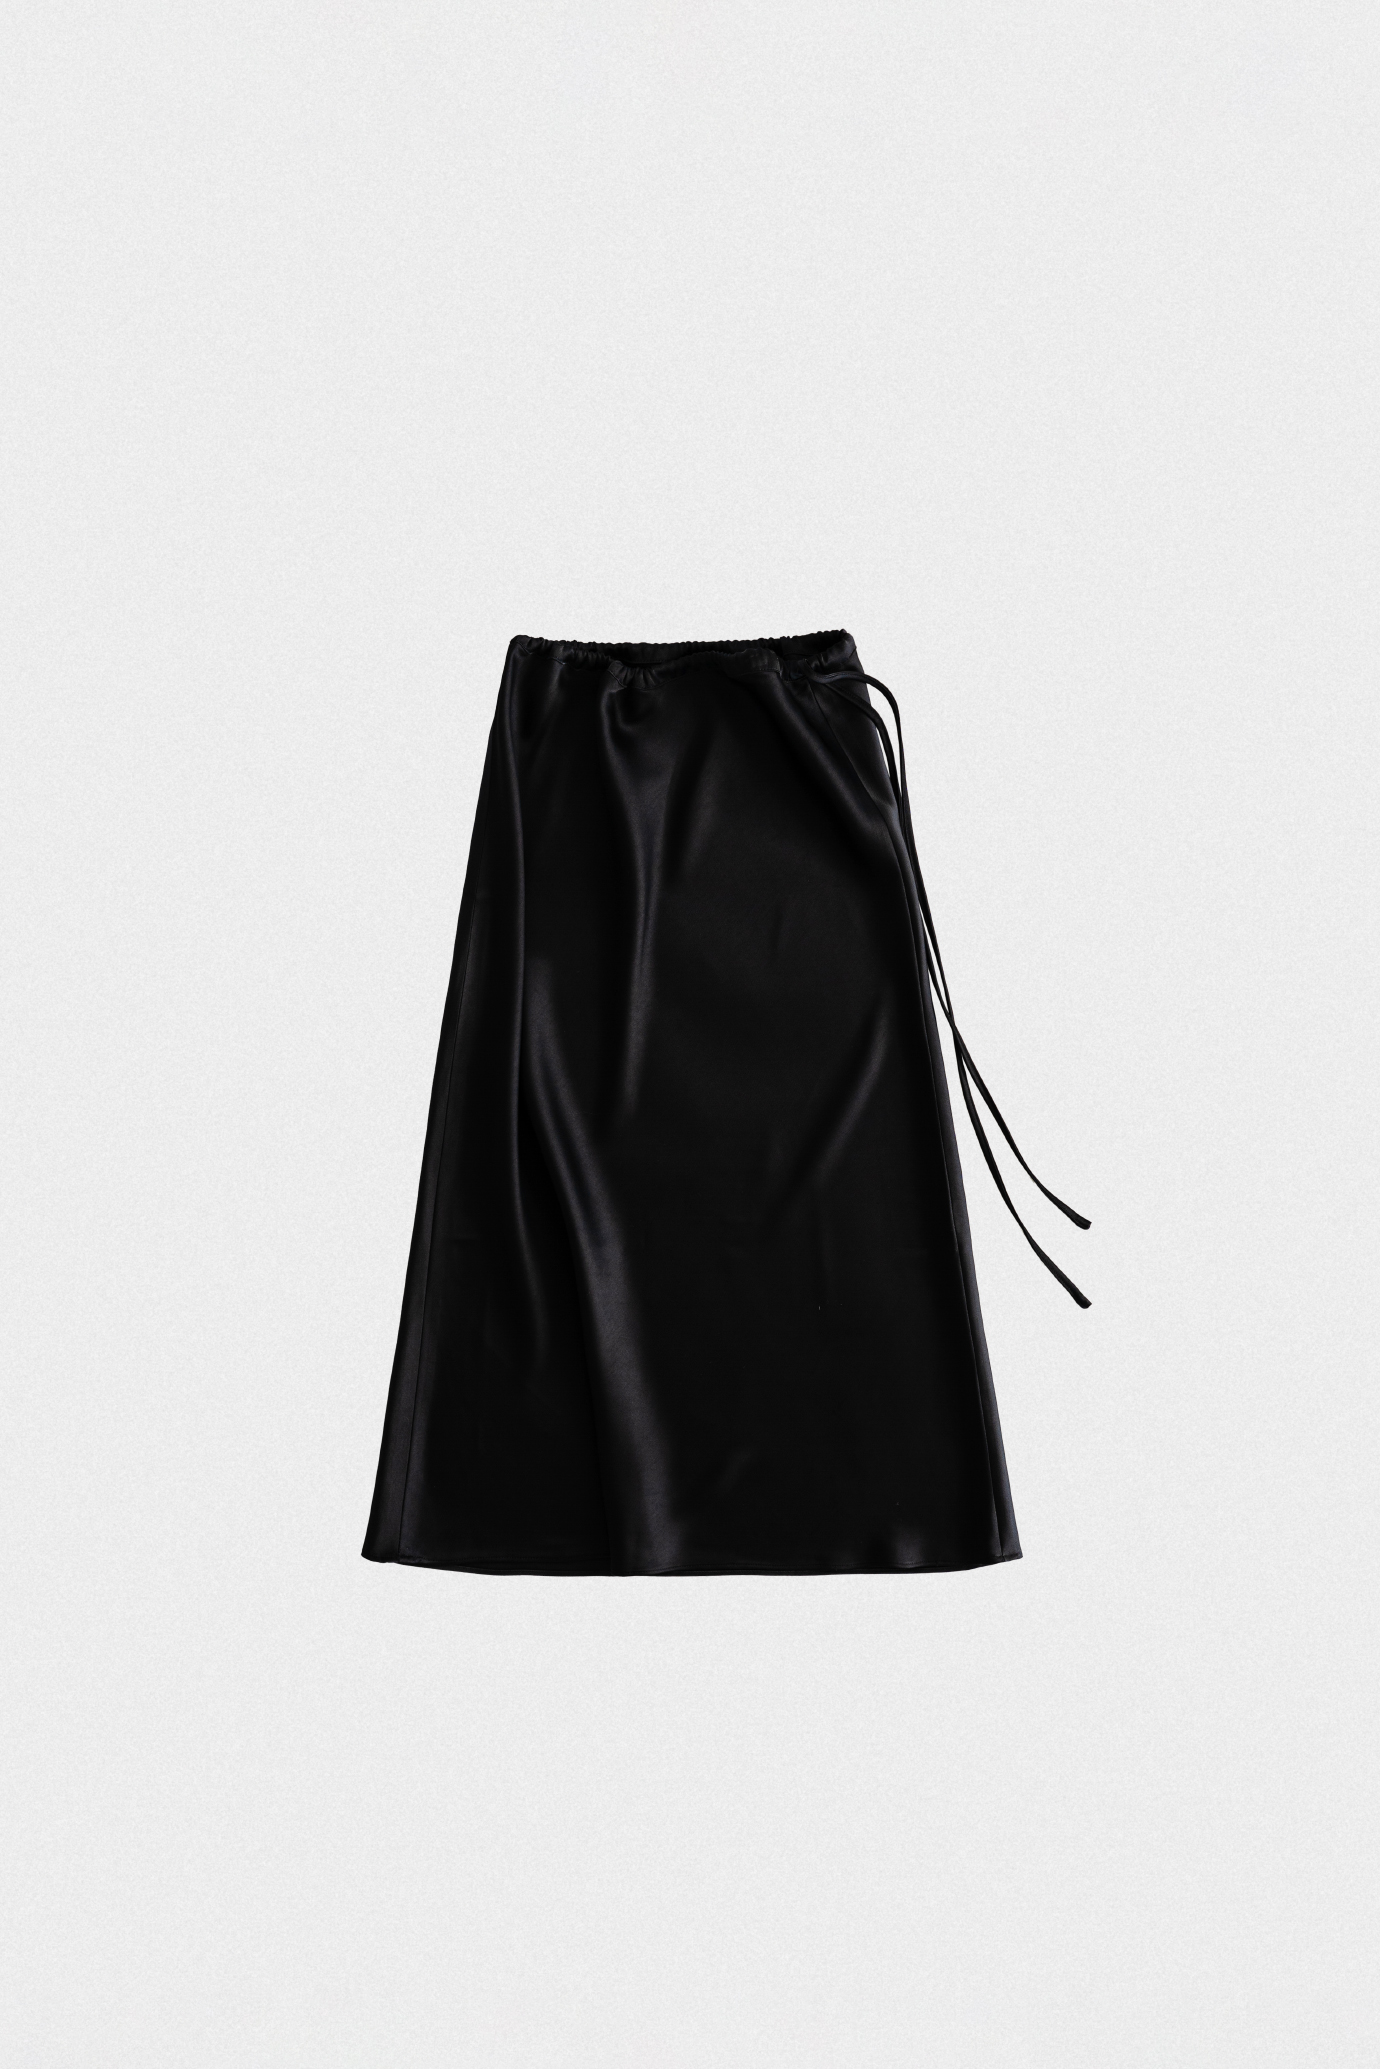 19603_Satin Skirt [tw]